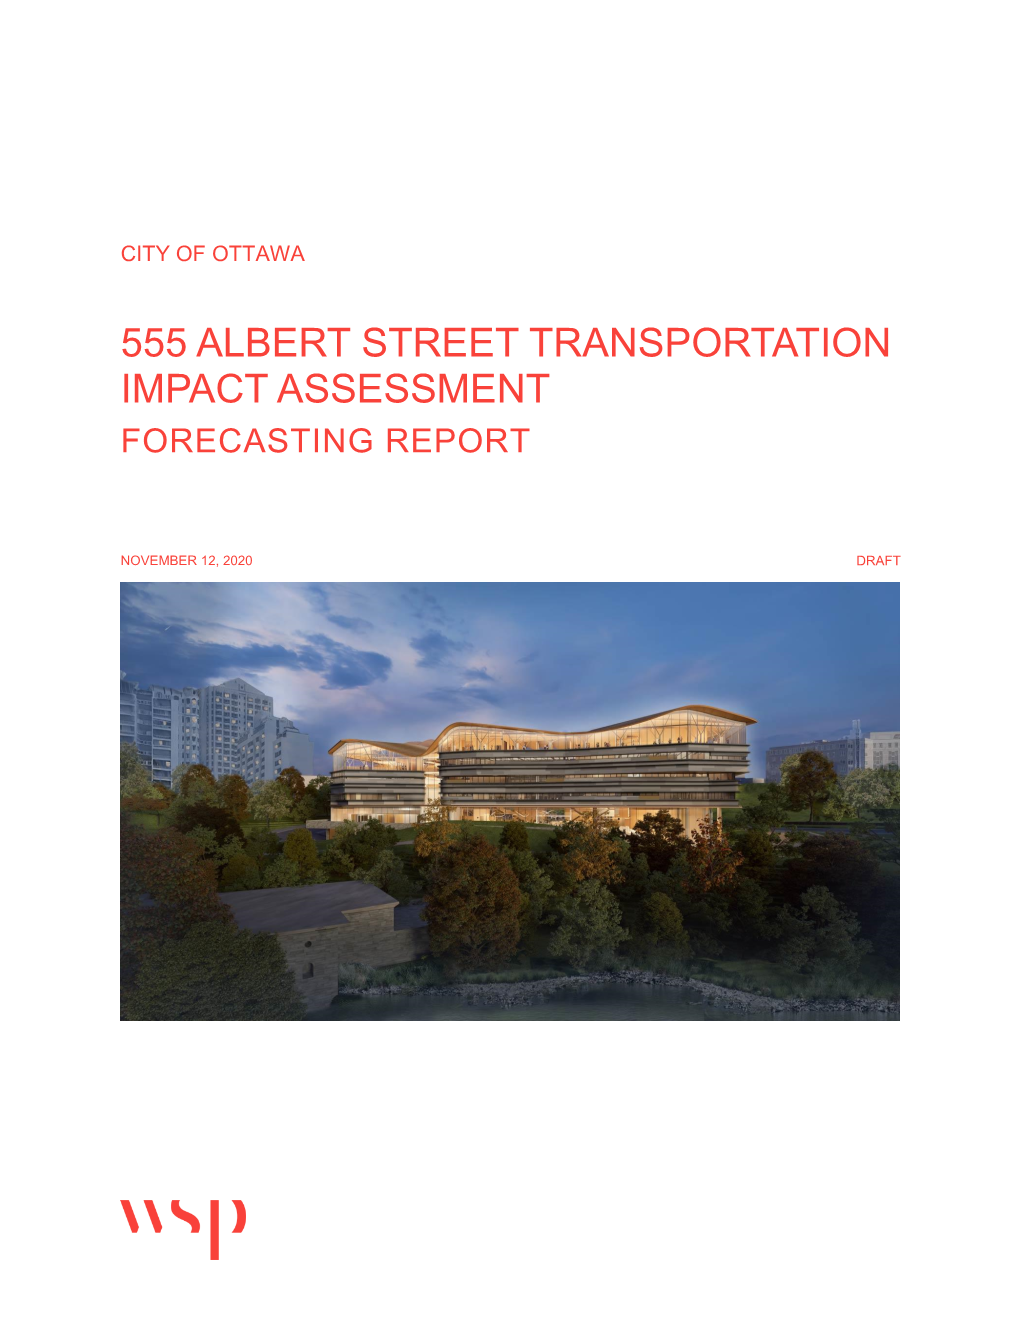 Transportation Impact Assessment Forecasting Report